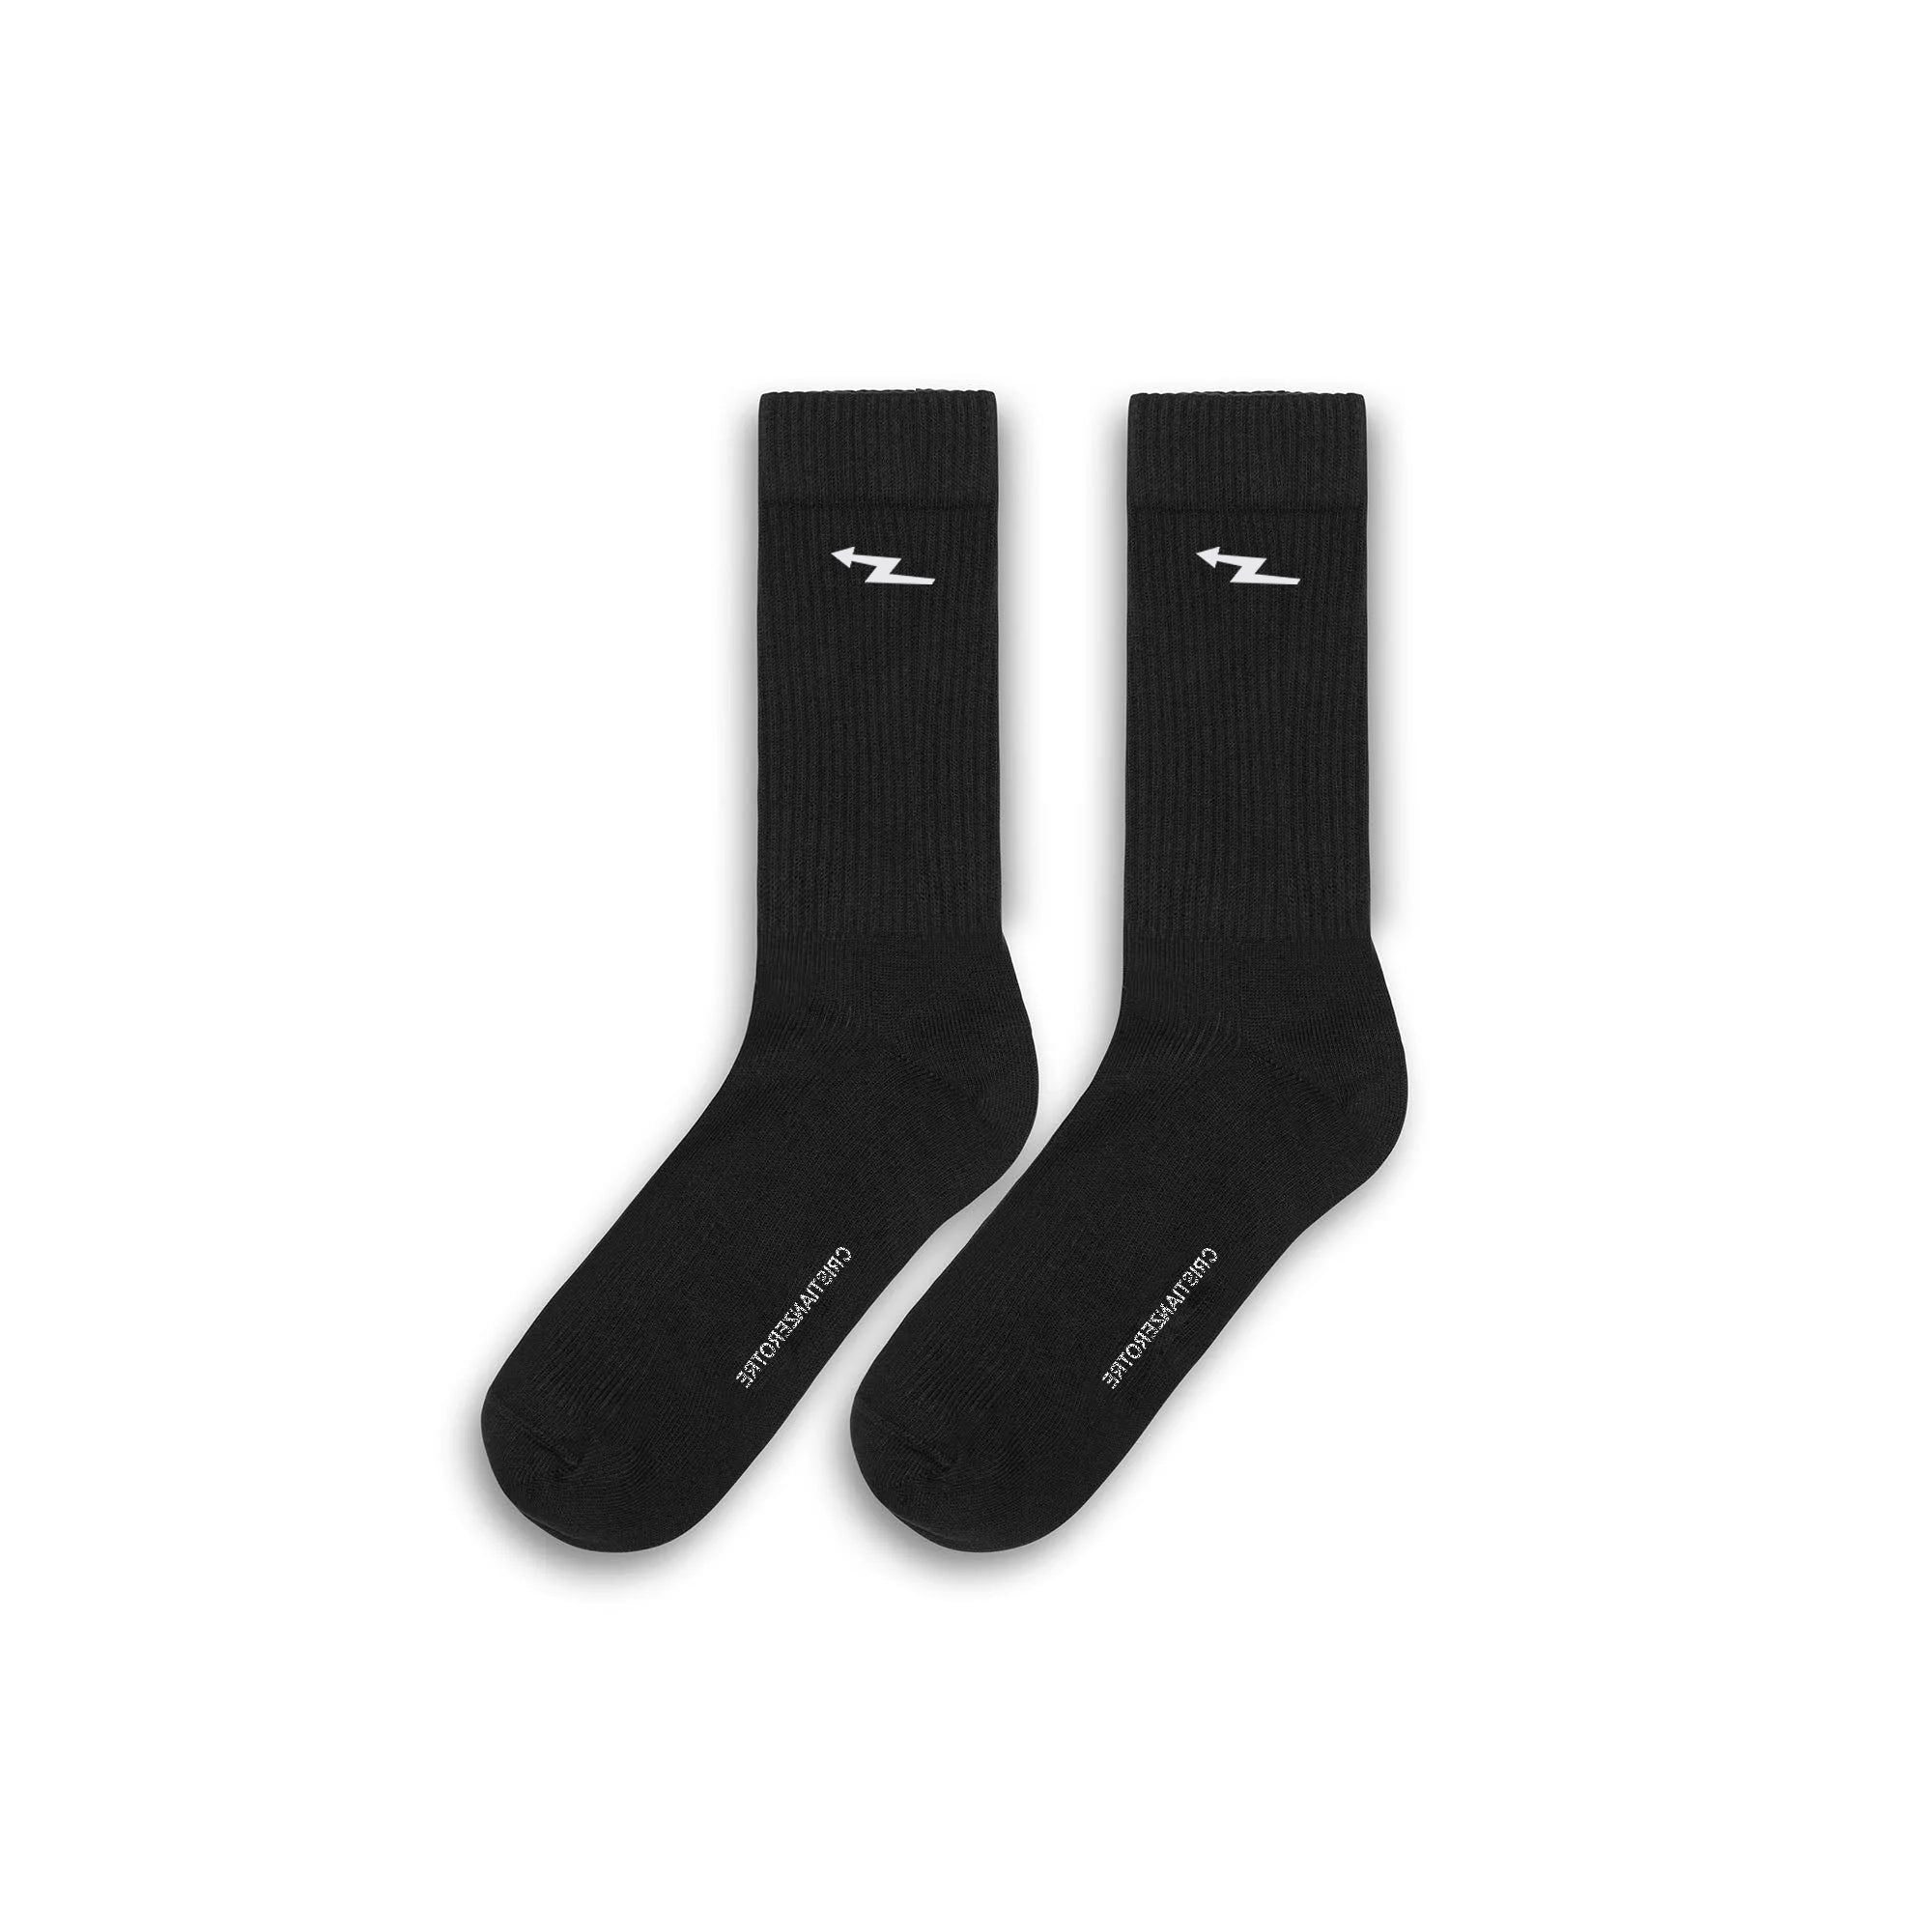 Black socks with lightning logo